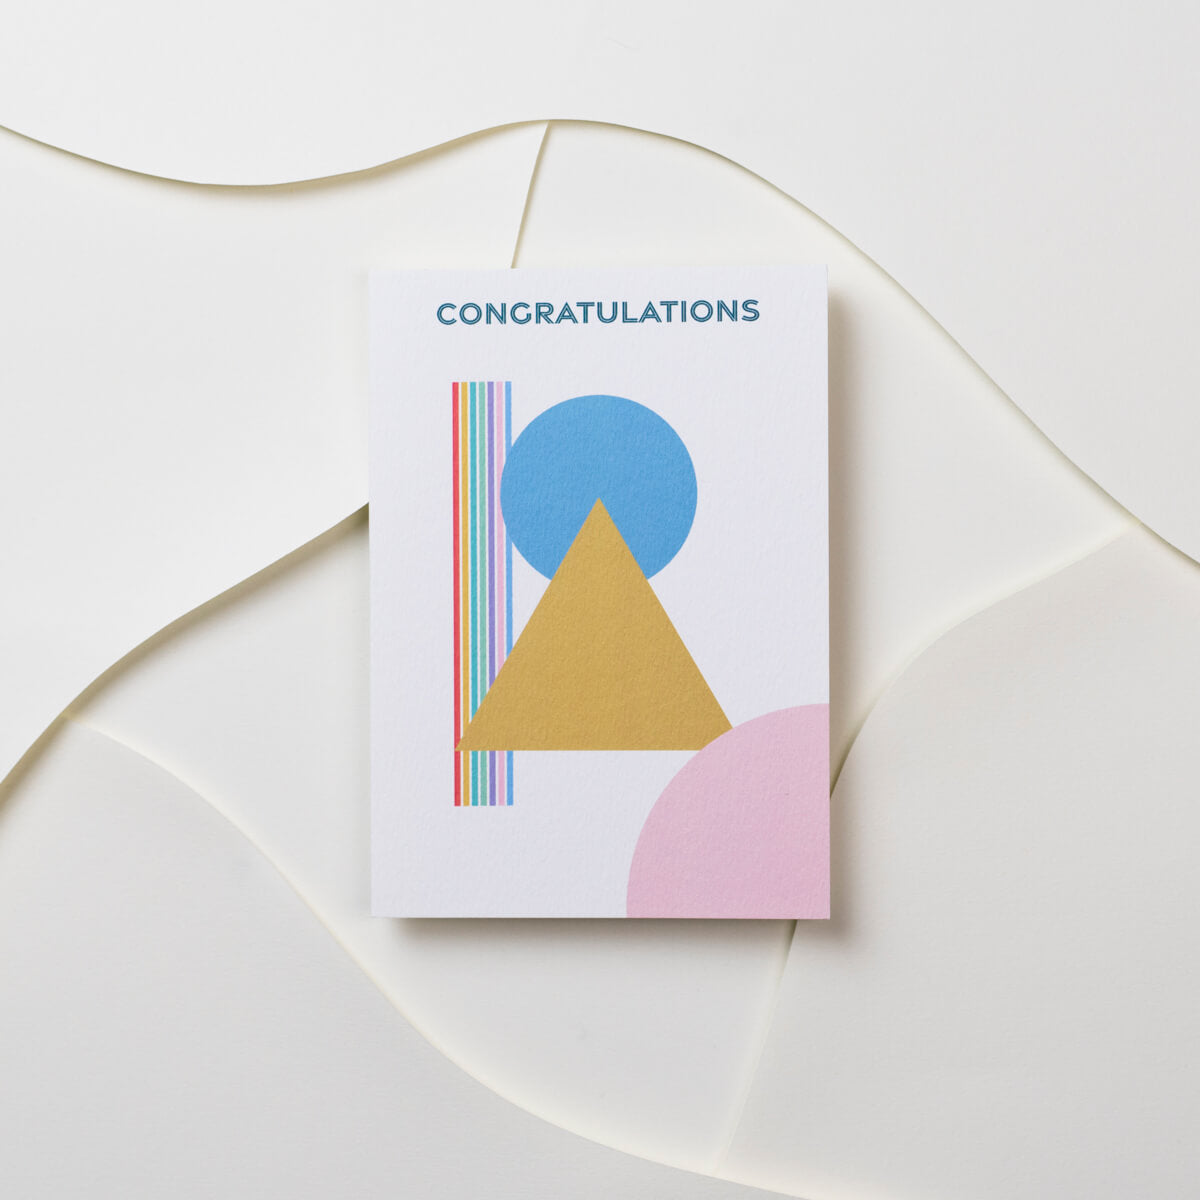 Congratulations Shapes Card - The Design Palette